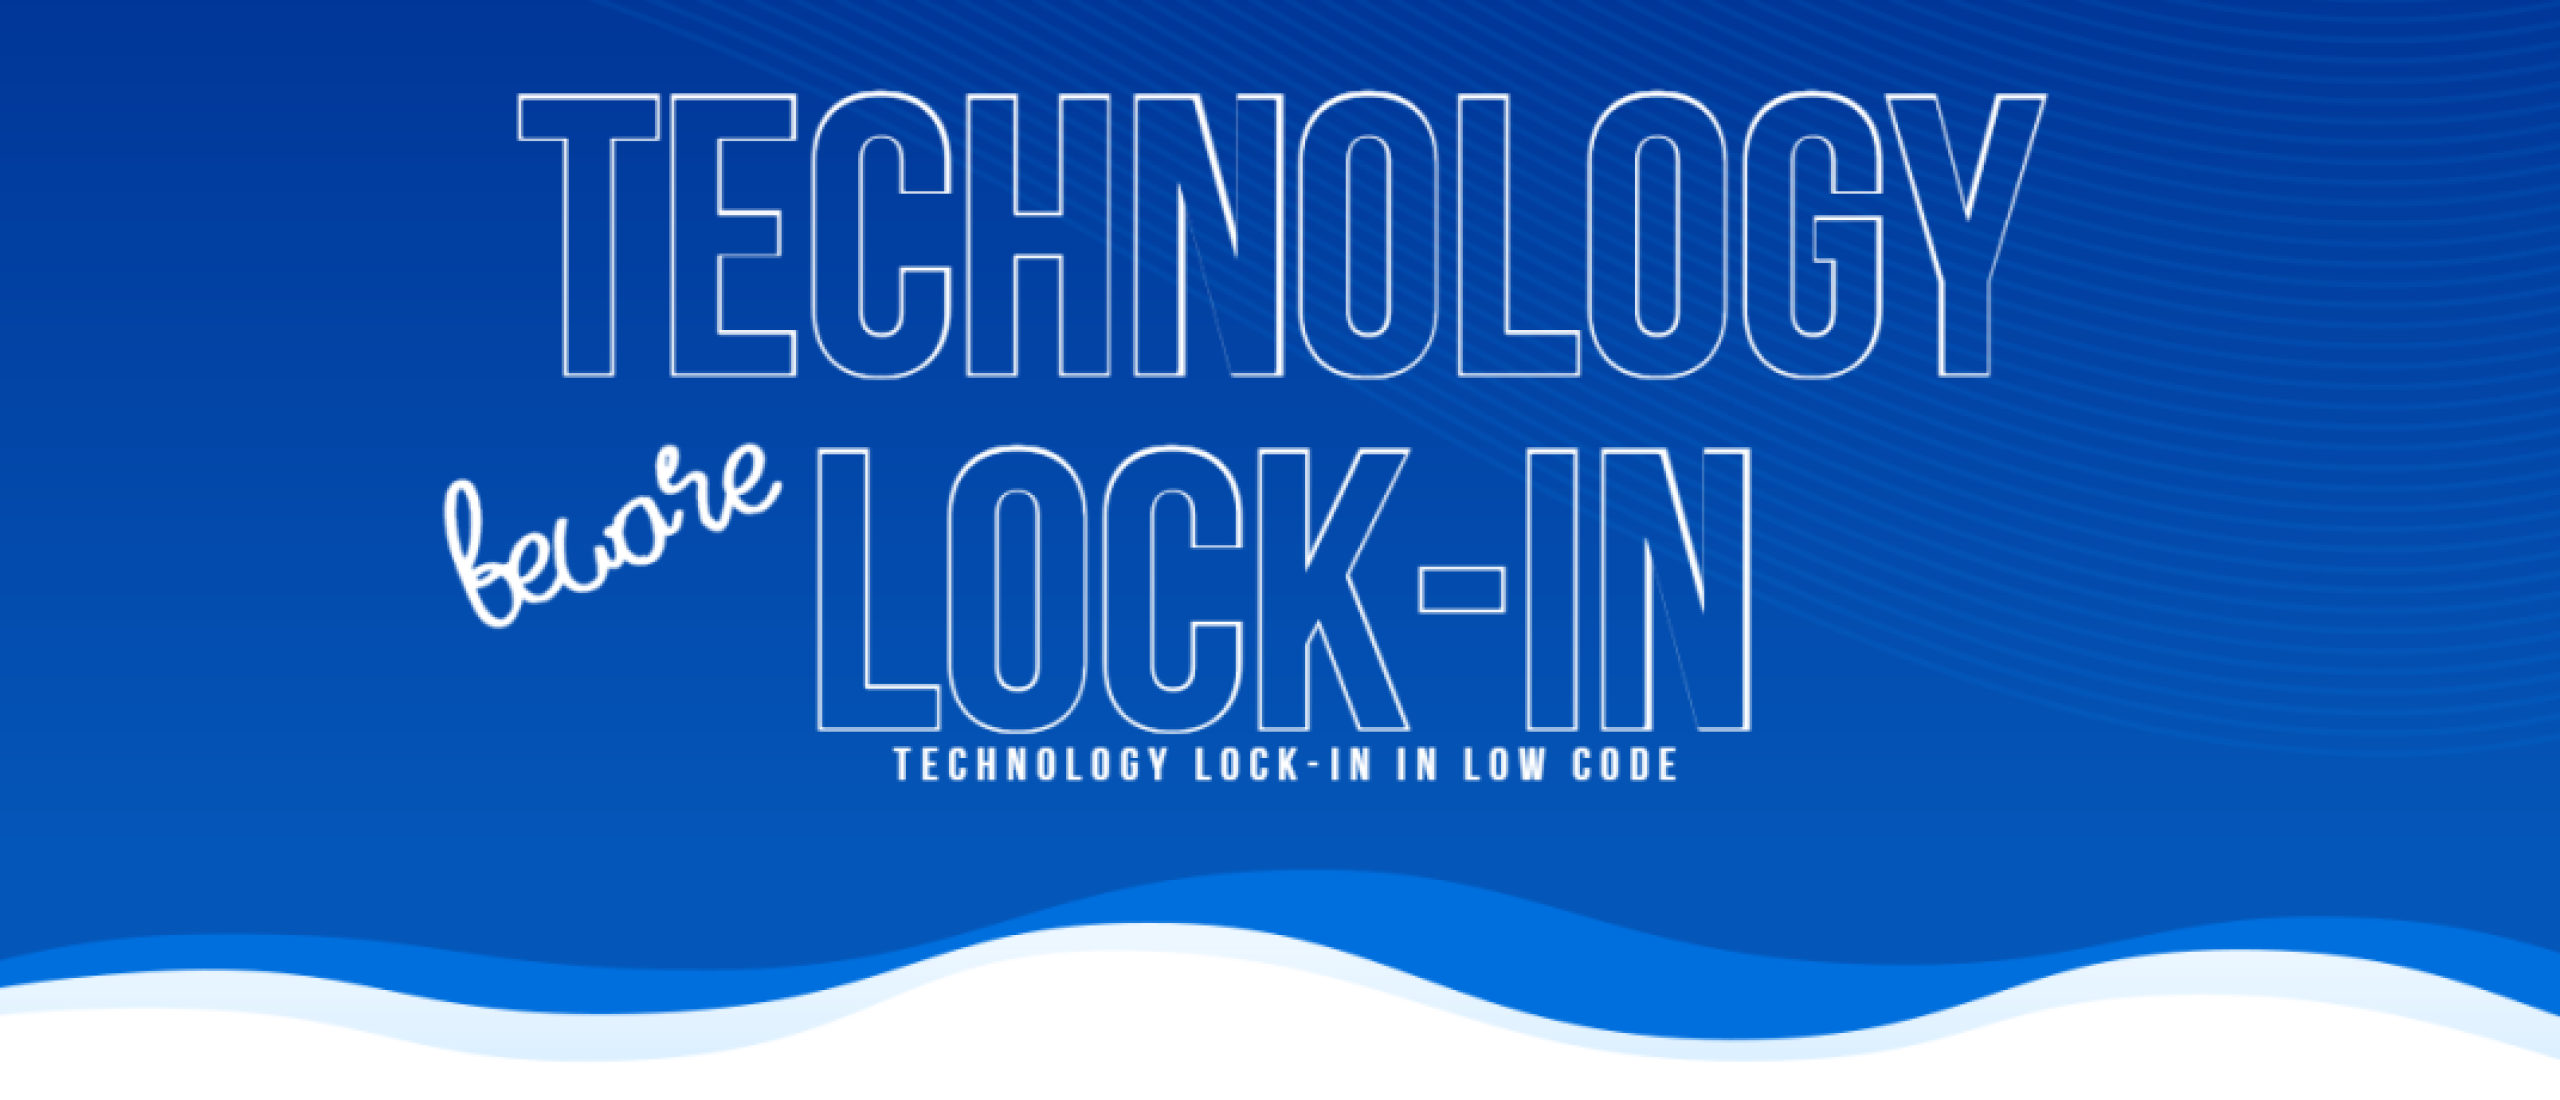 Low Code technology lock-in